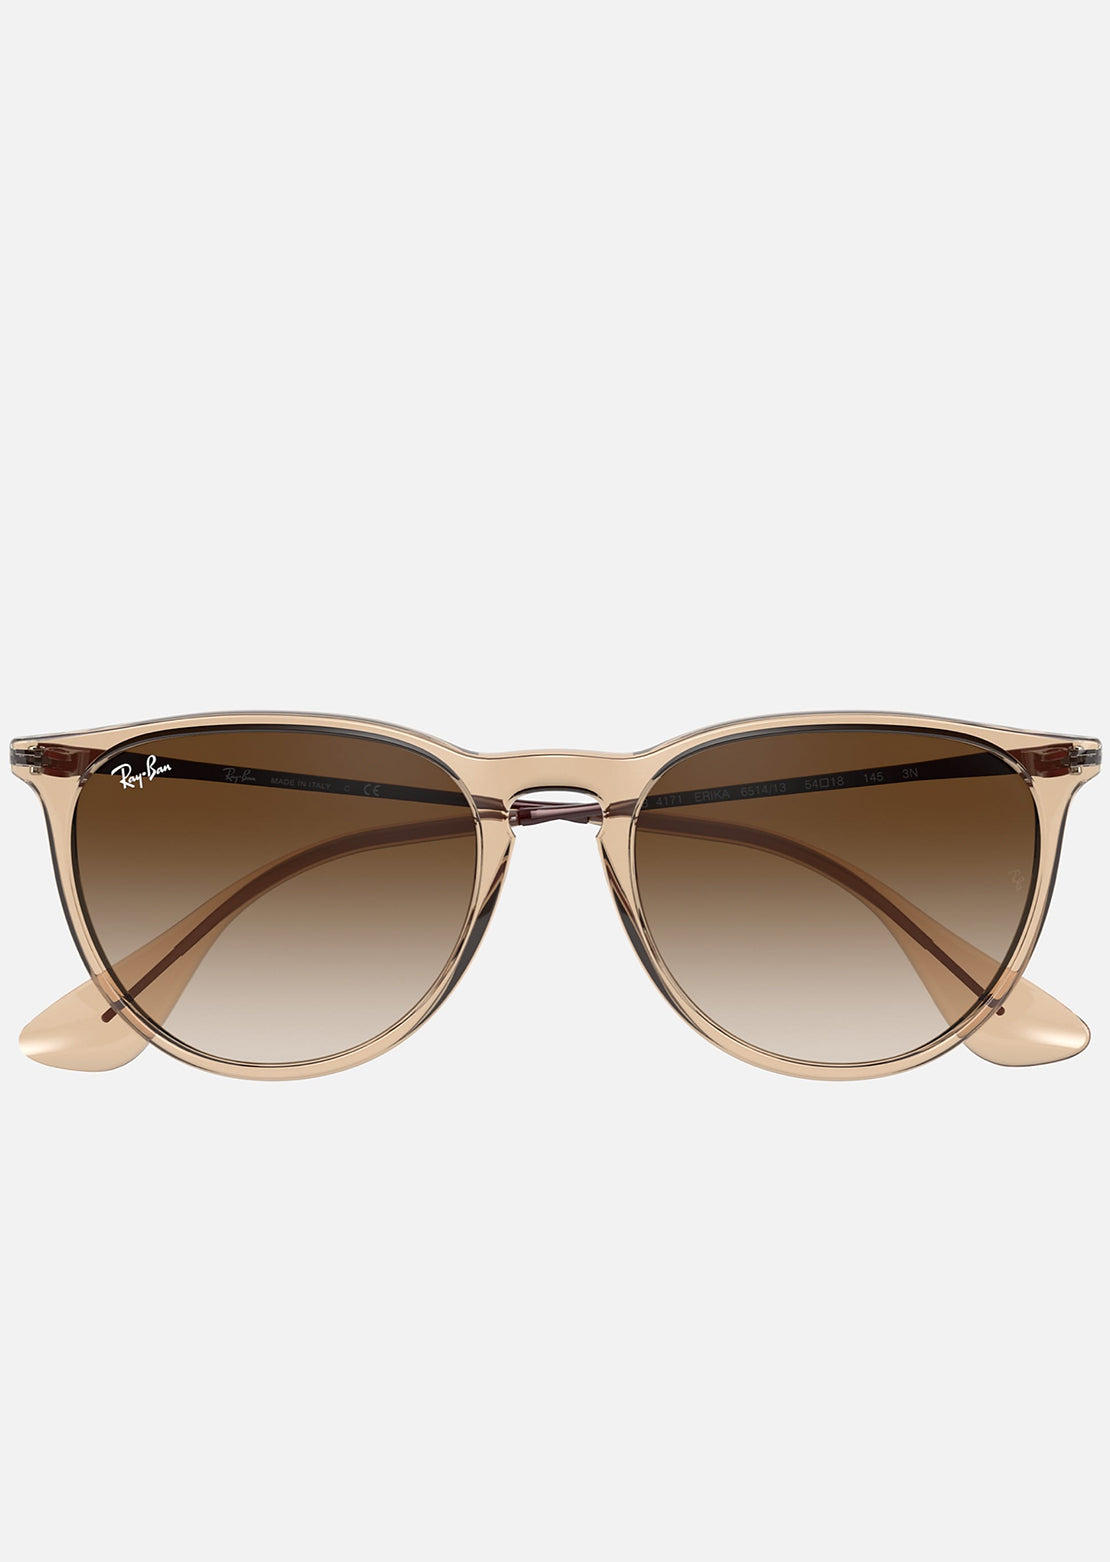 Ray-Ban Erika RB4171 Sunglasses Nylon Transparent Brown/Brown Gradient